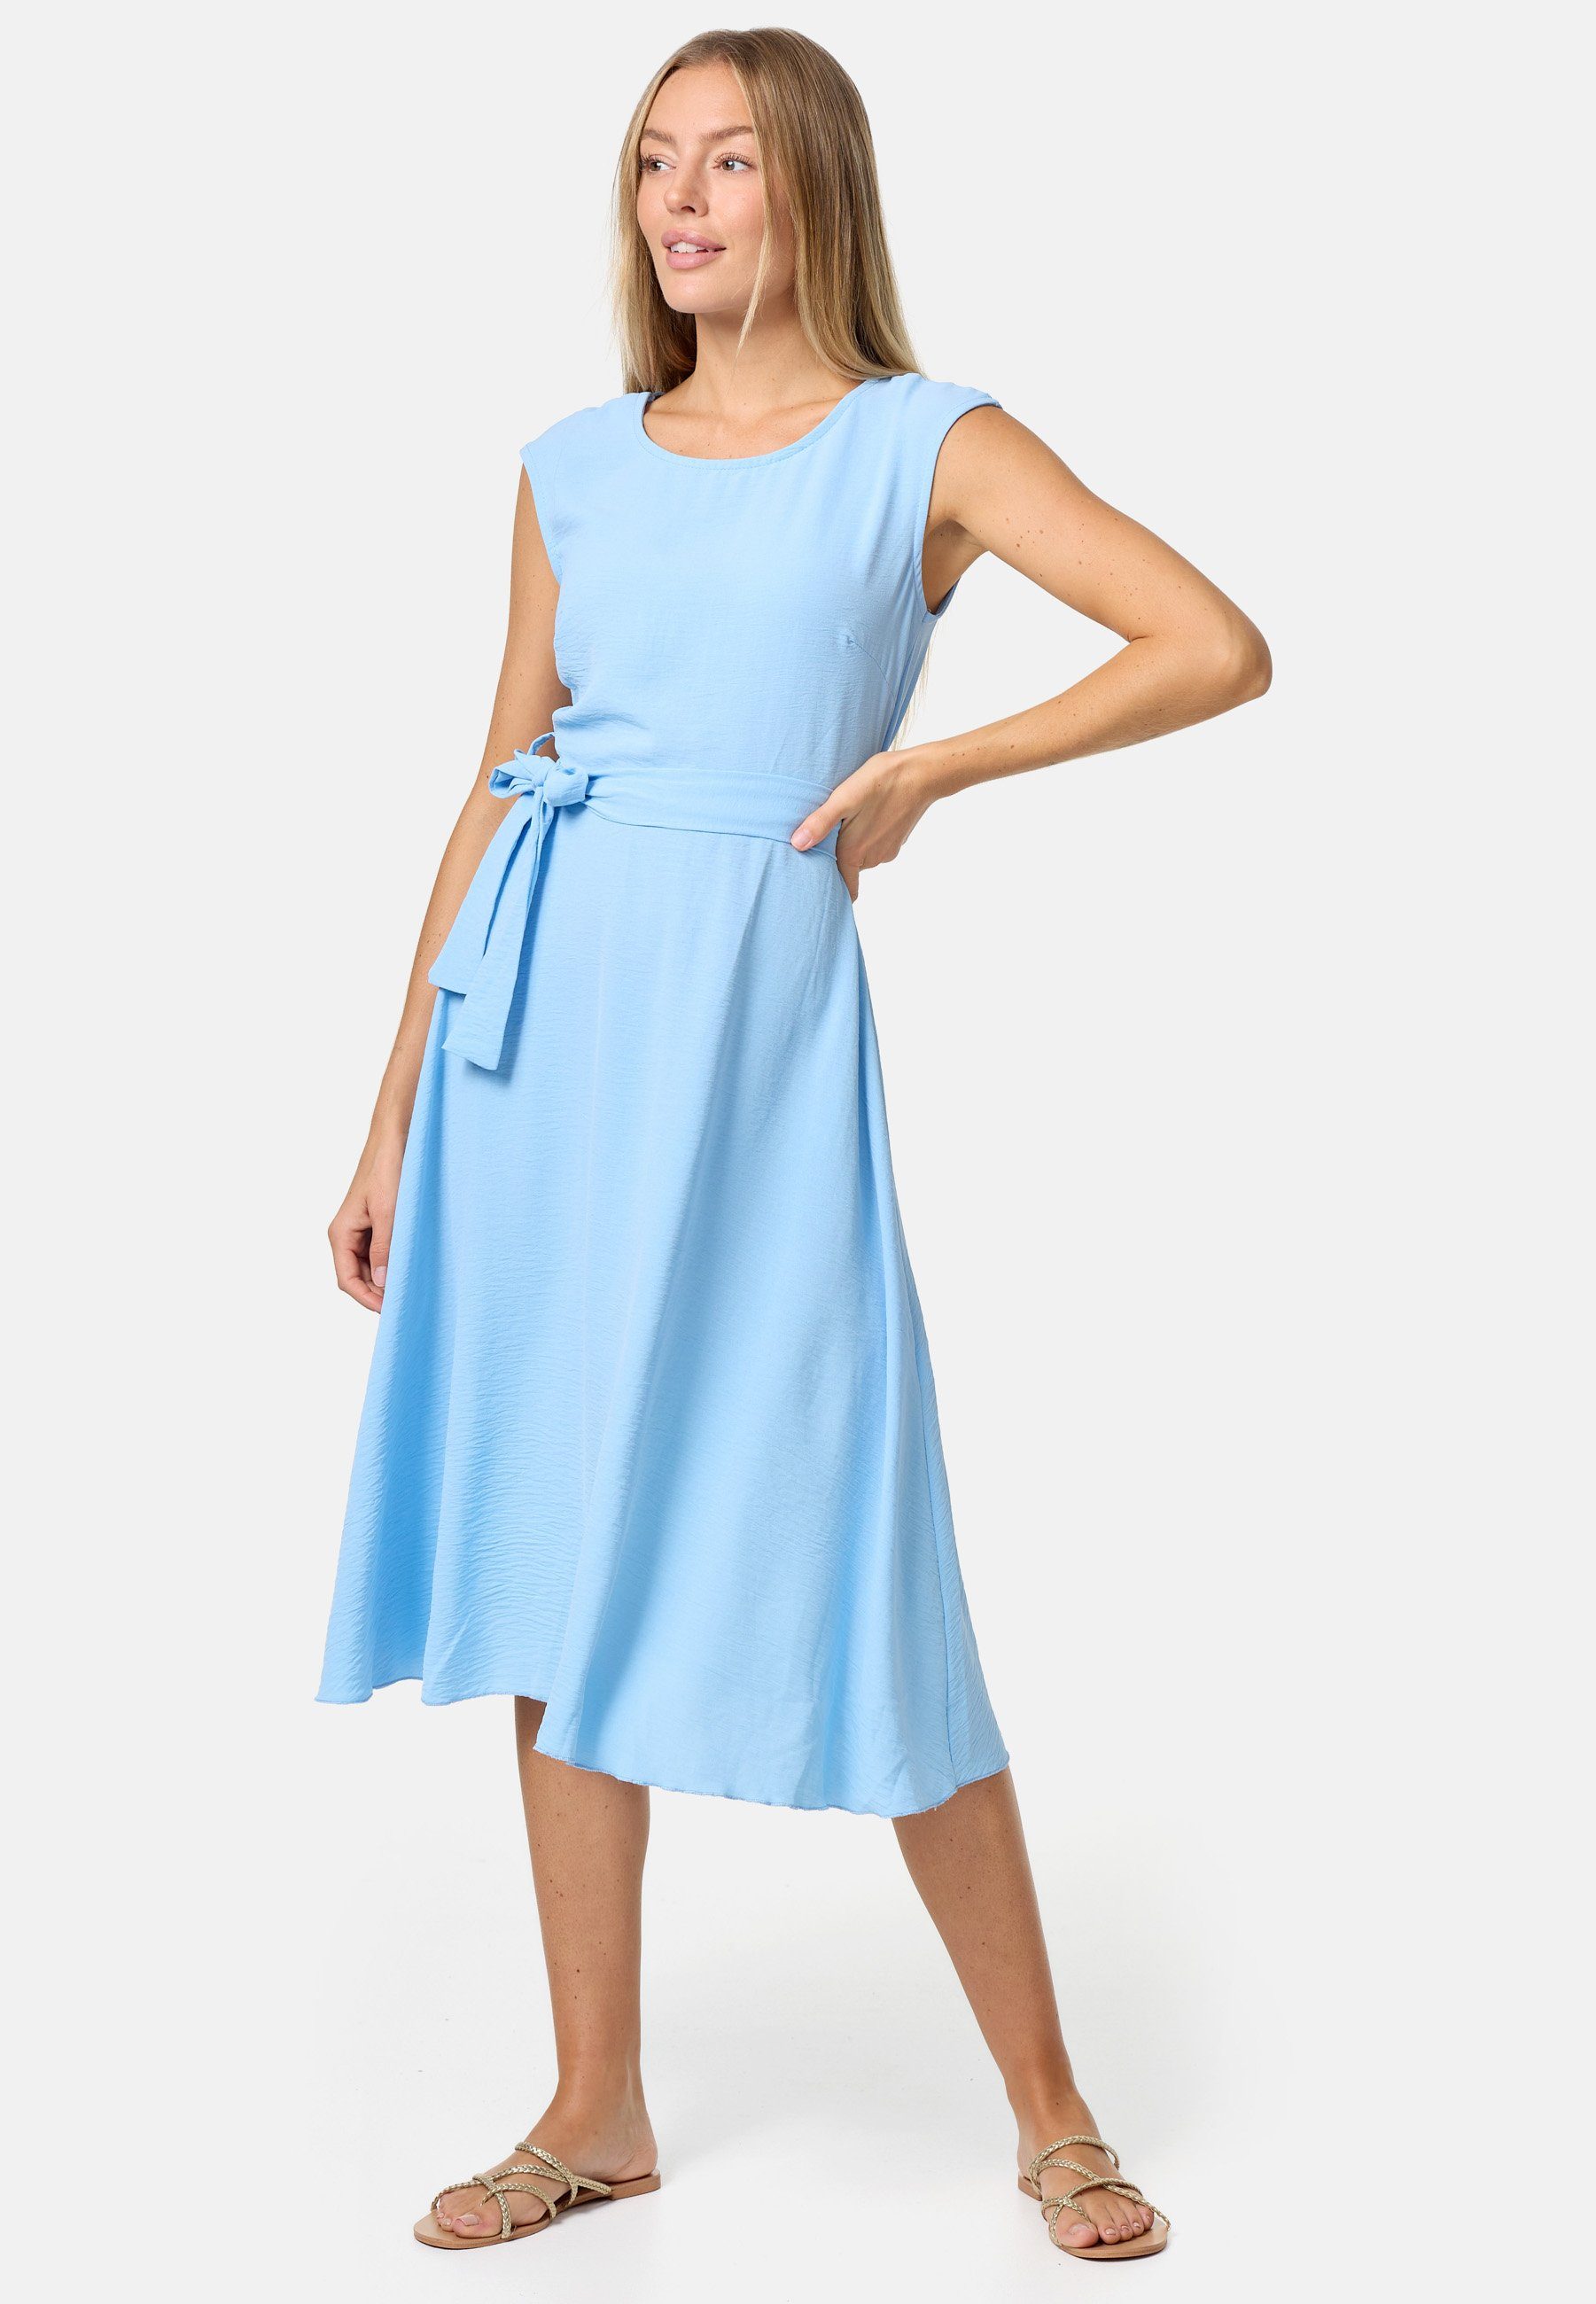 PM SELECTED Midikleid PM-26 (Ärmelloses Sommerkleid Dress mit Bindeband in Einheitsgröße) Blau